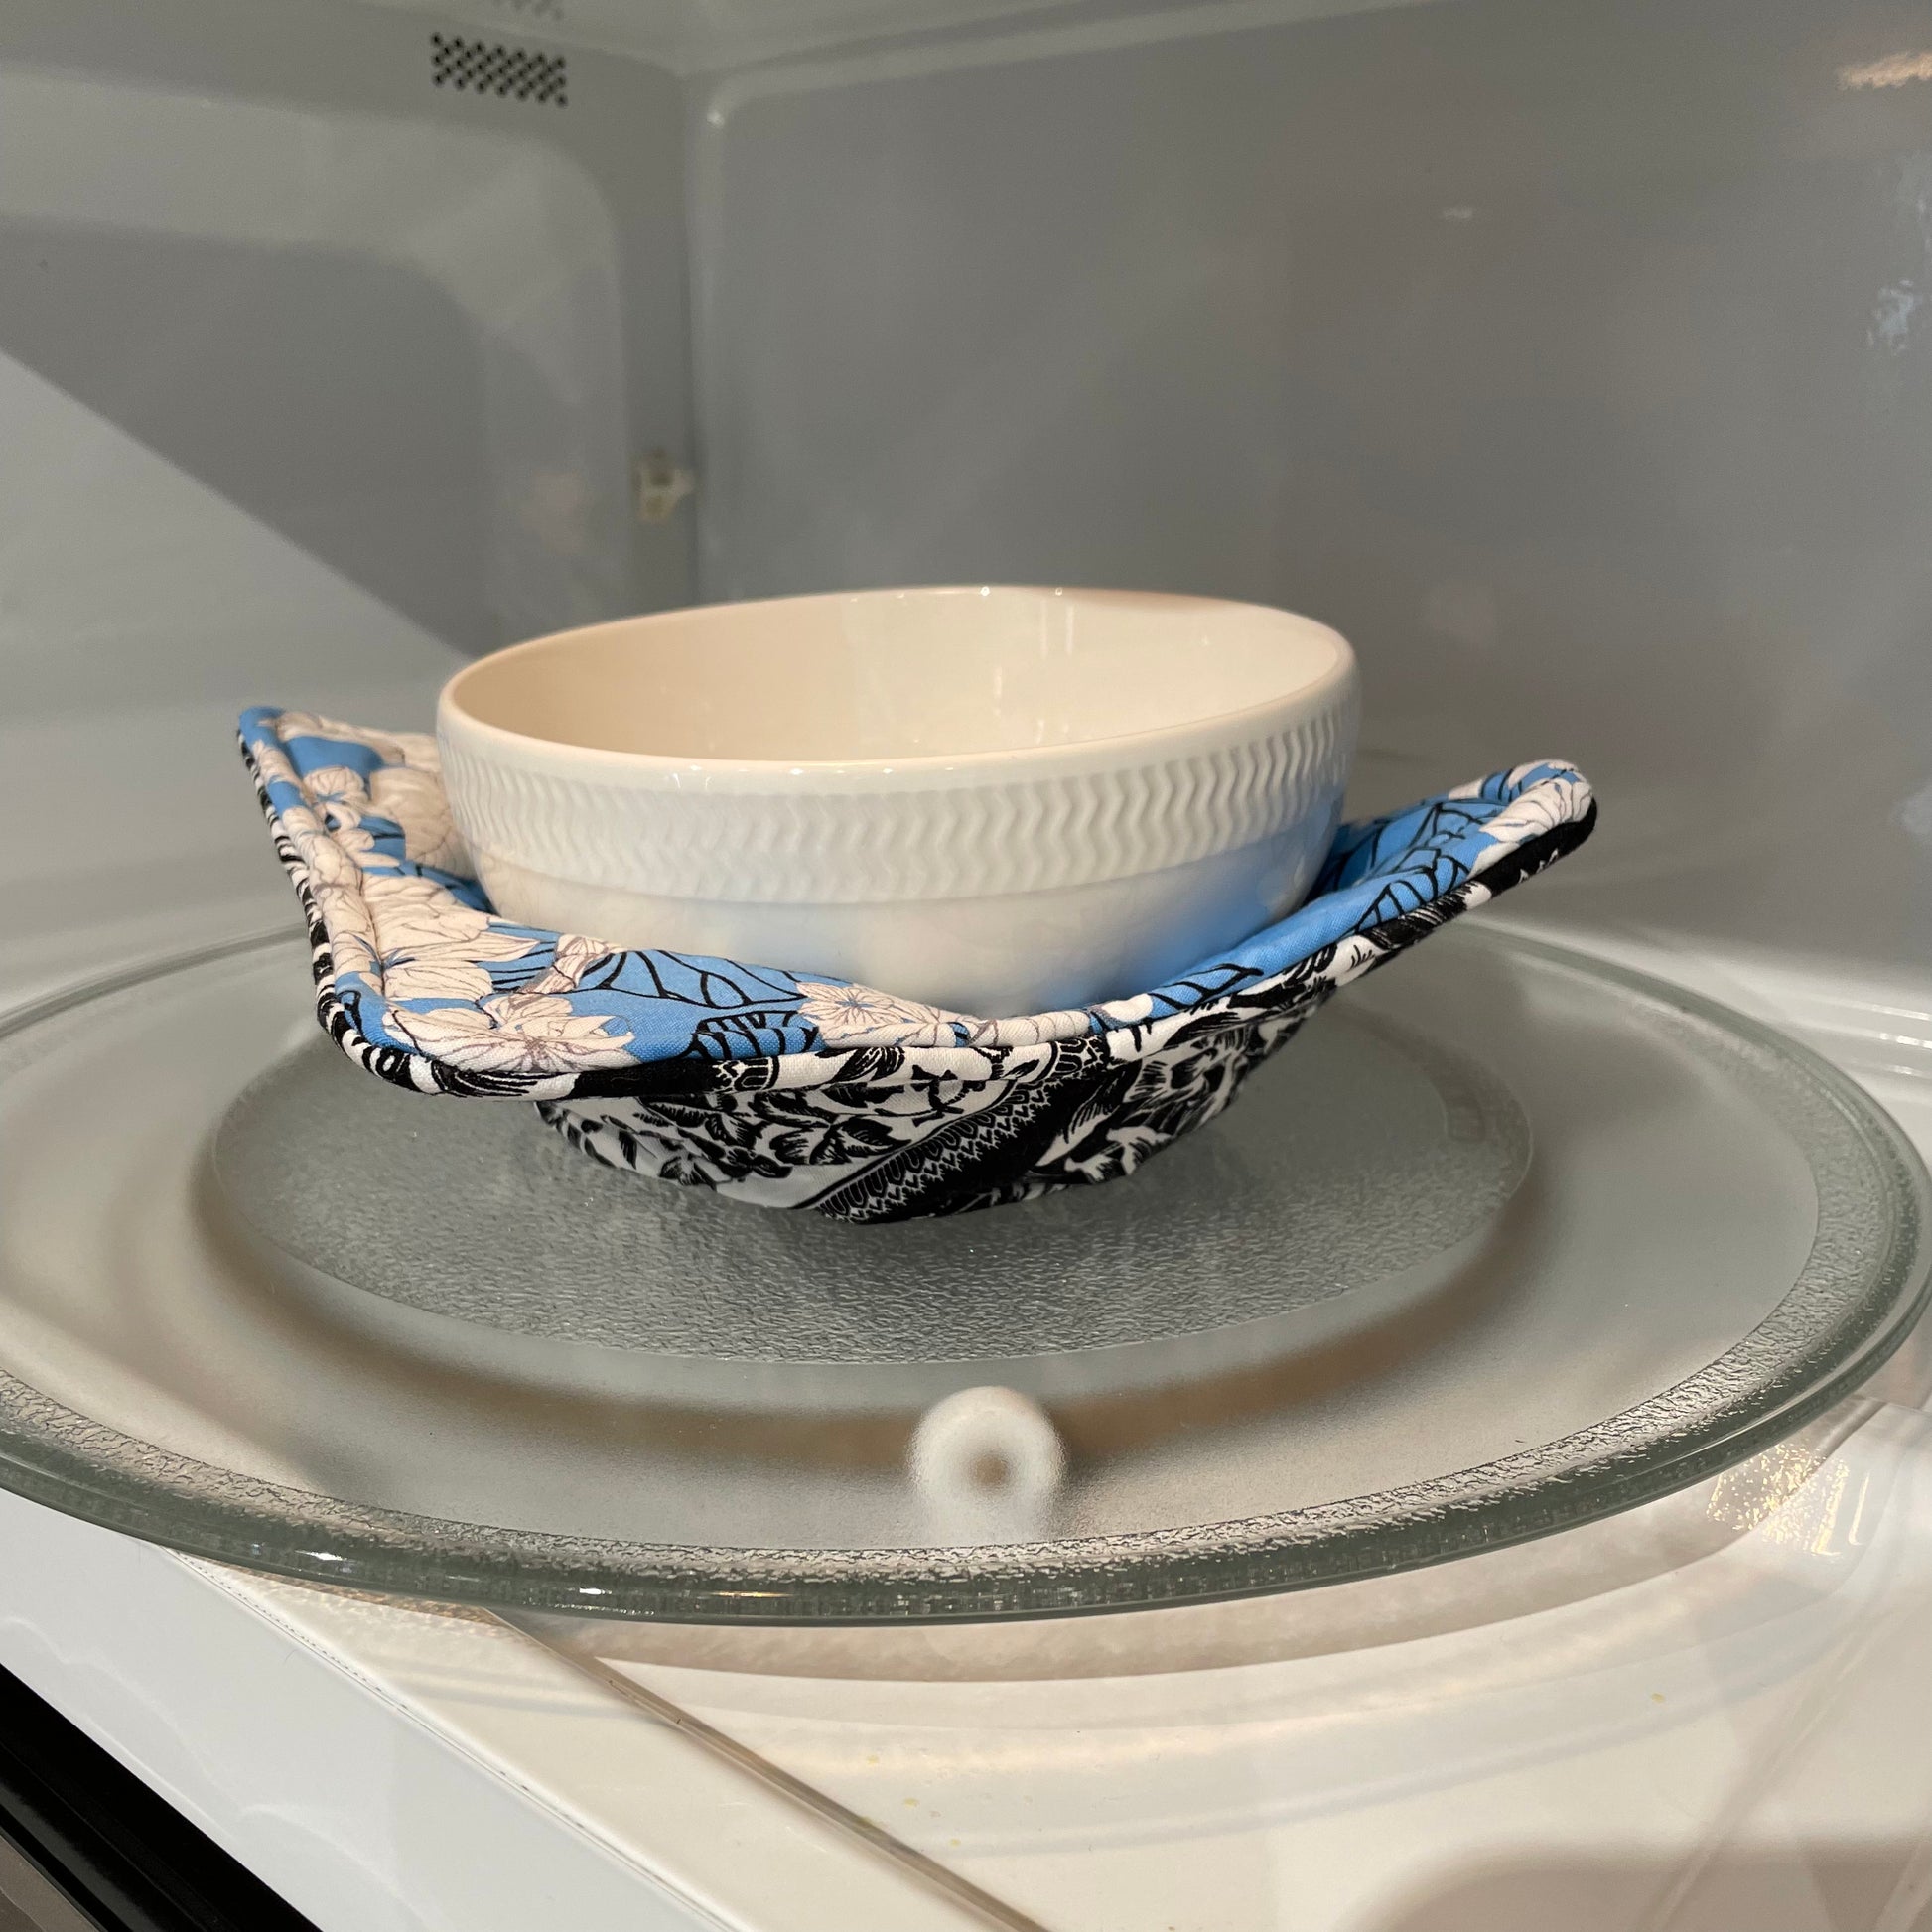 Microwave Bowl Cozy